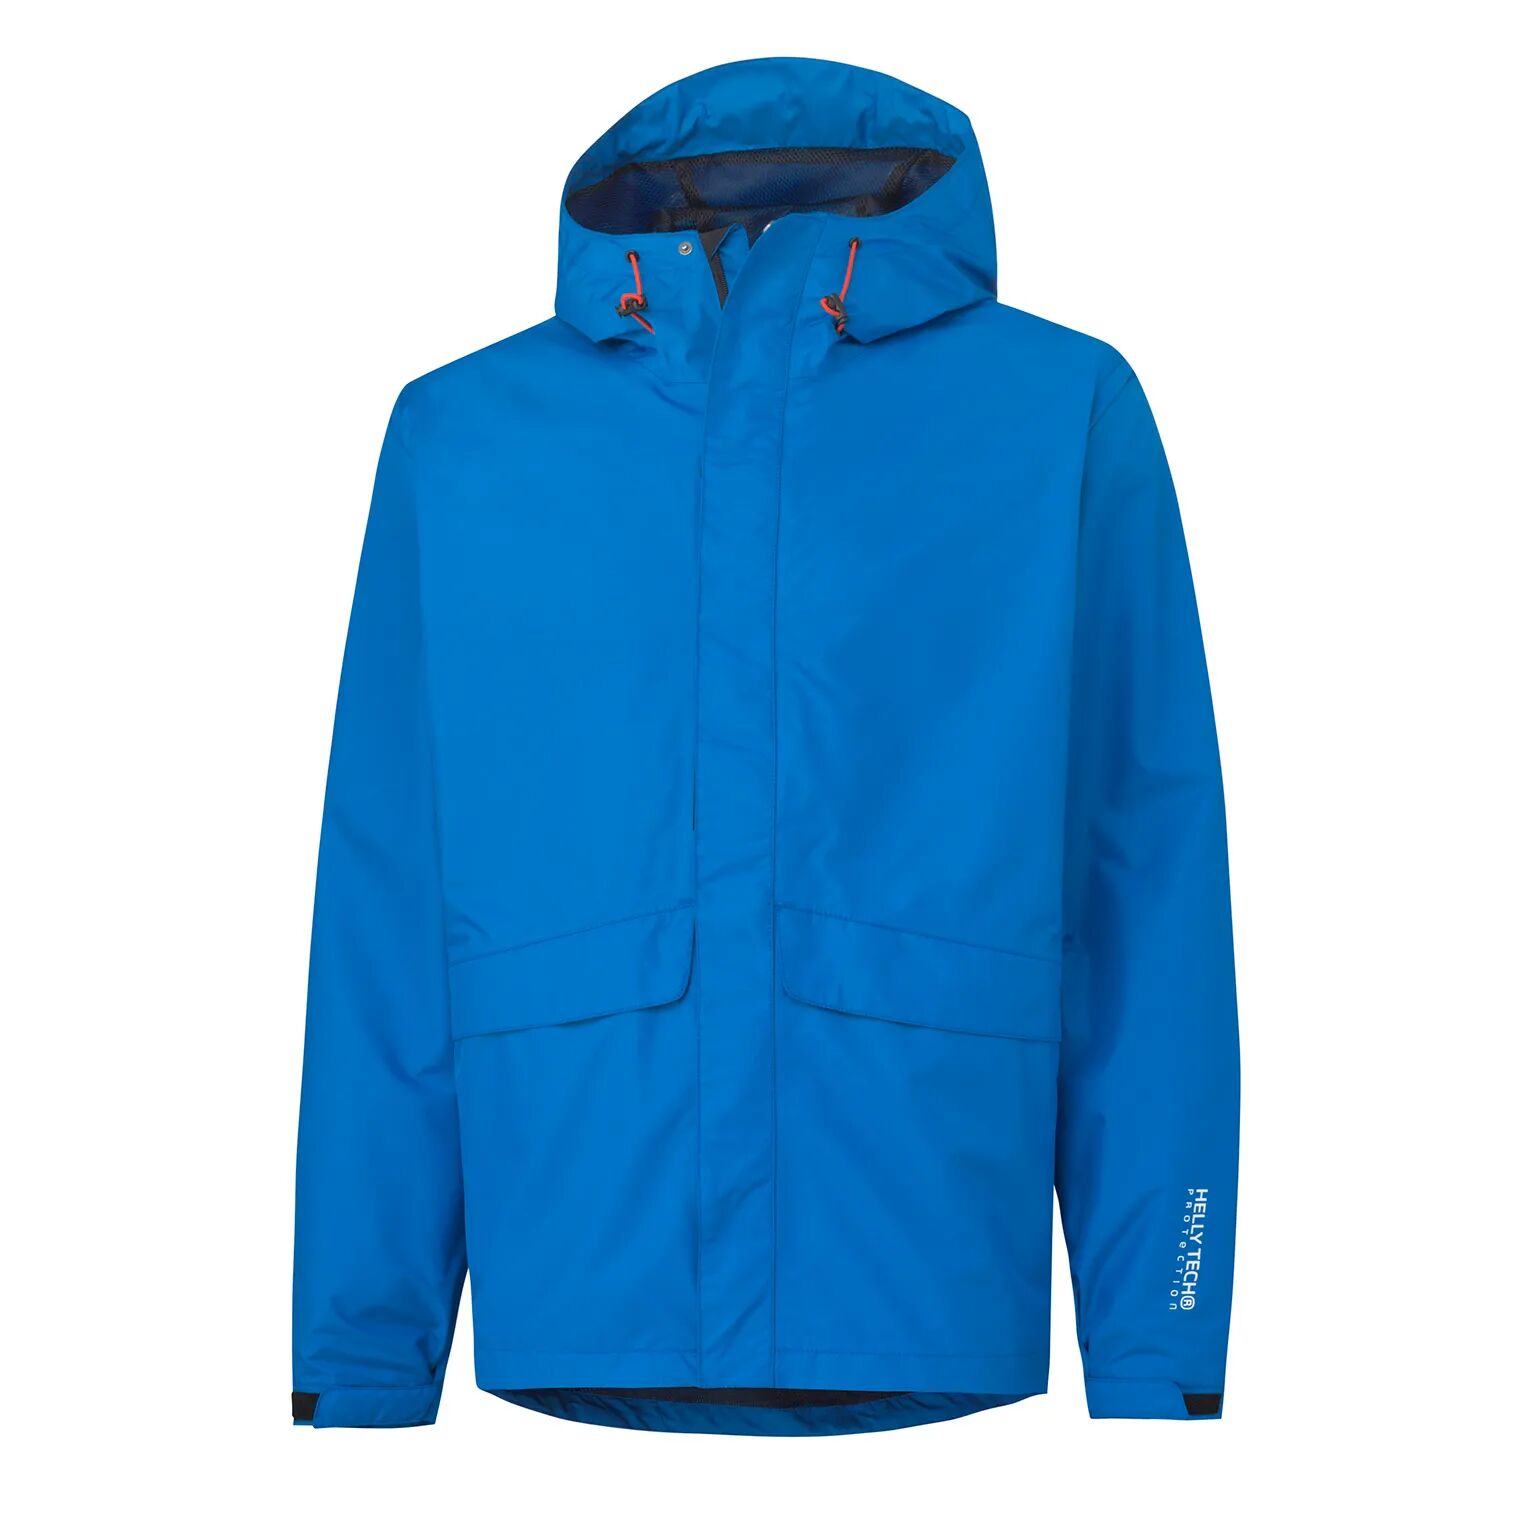 HH Workwear Helly Hansen WorkwearManchester Protective Waterproof Rain Jacket Blue XXXL